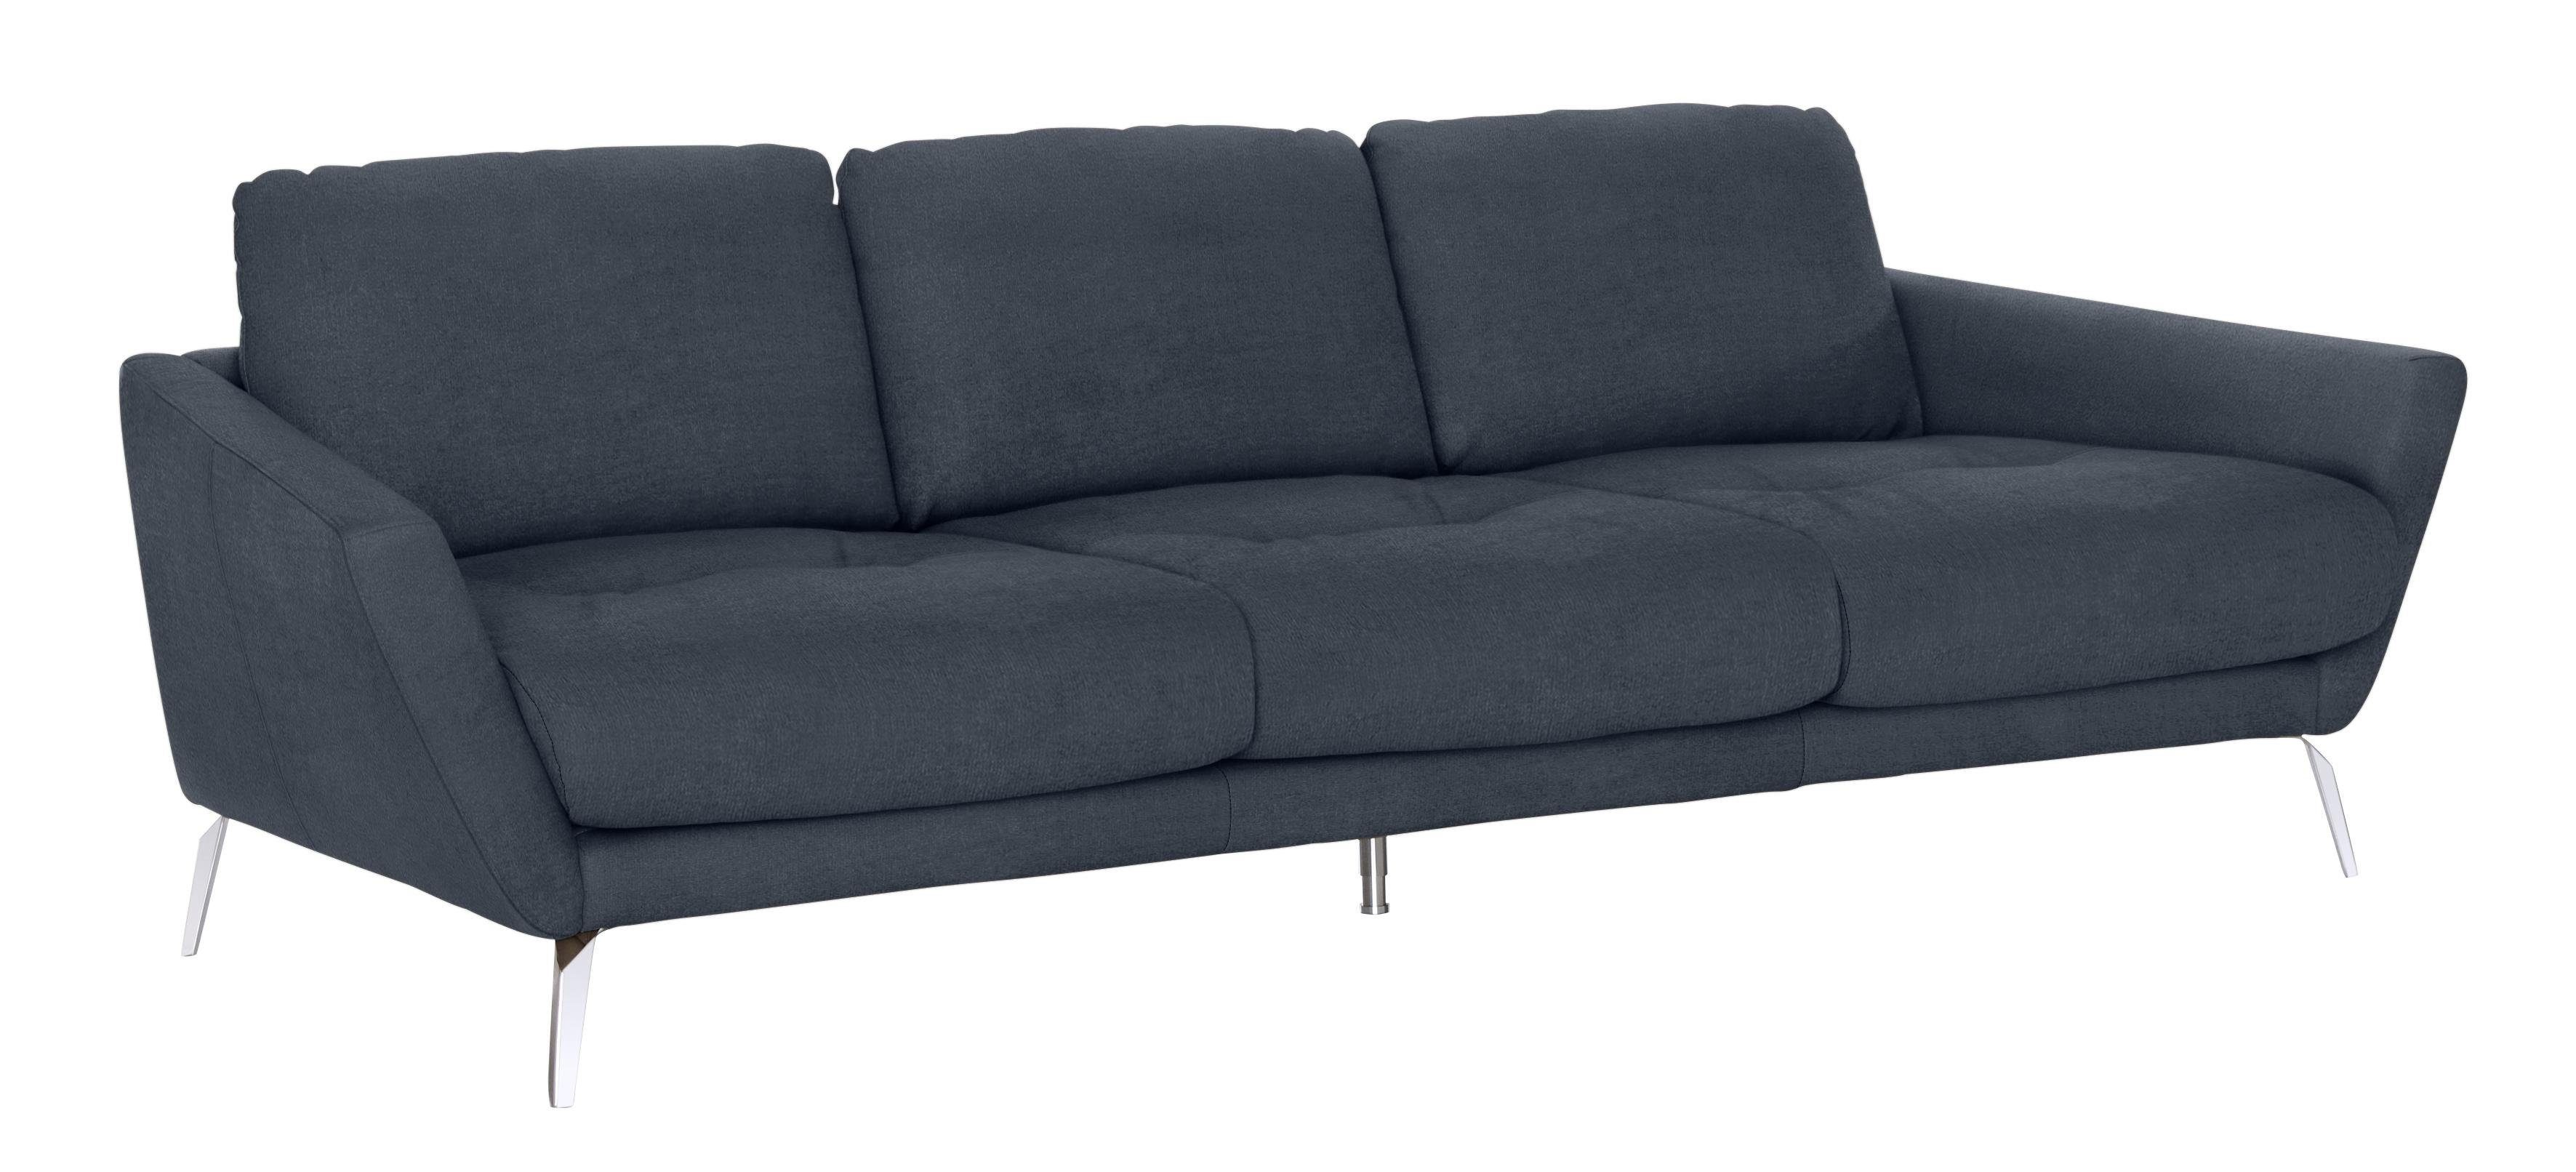 W.SCHILLIG im mit Sitz, glänzend Heftung Big-Sofa dekorativer Chrom Füße softy,